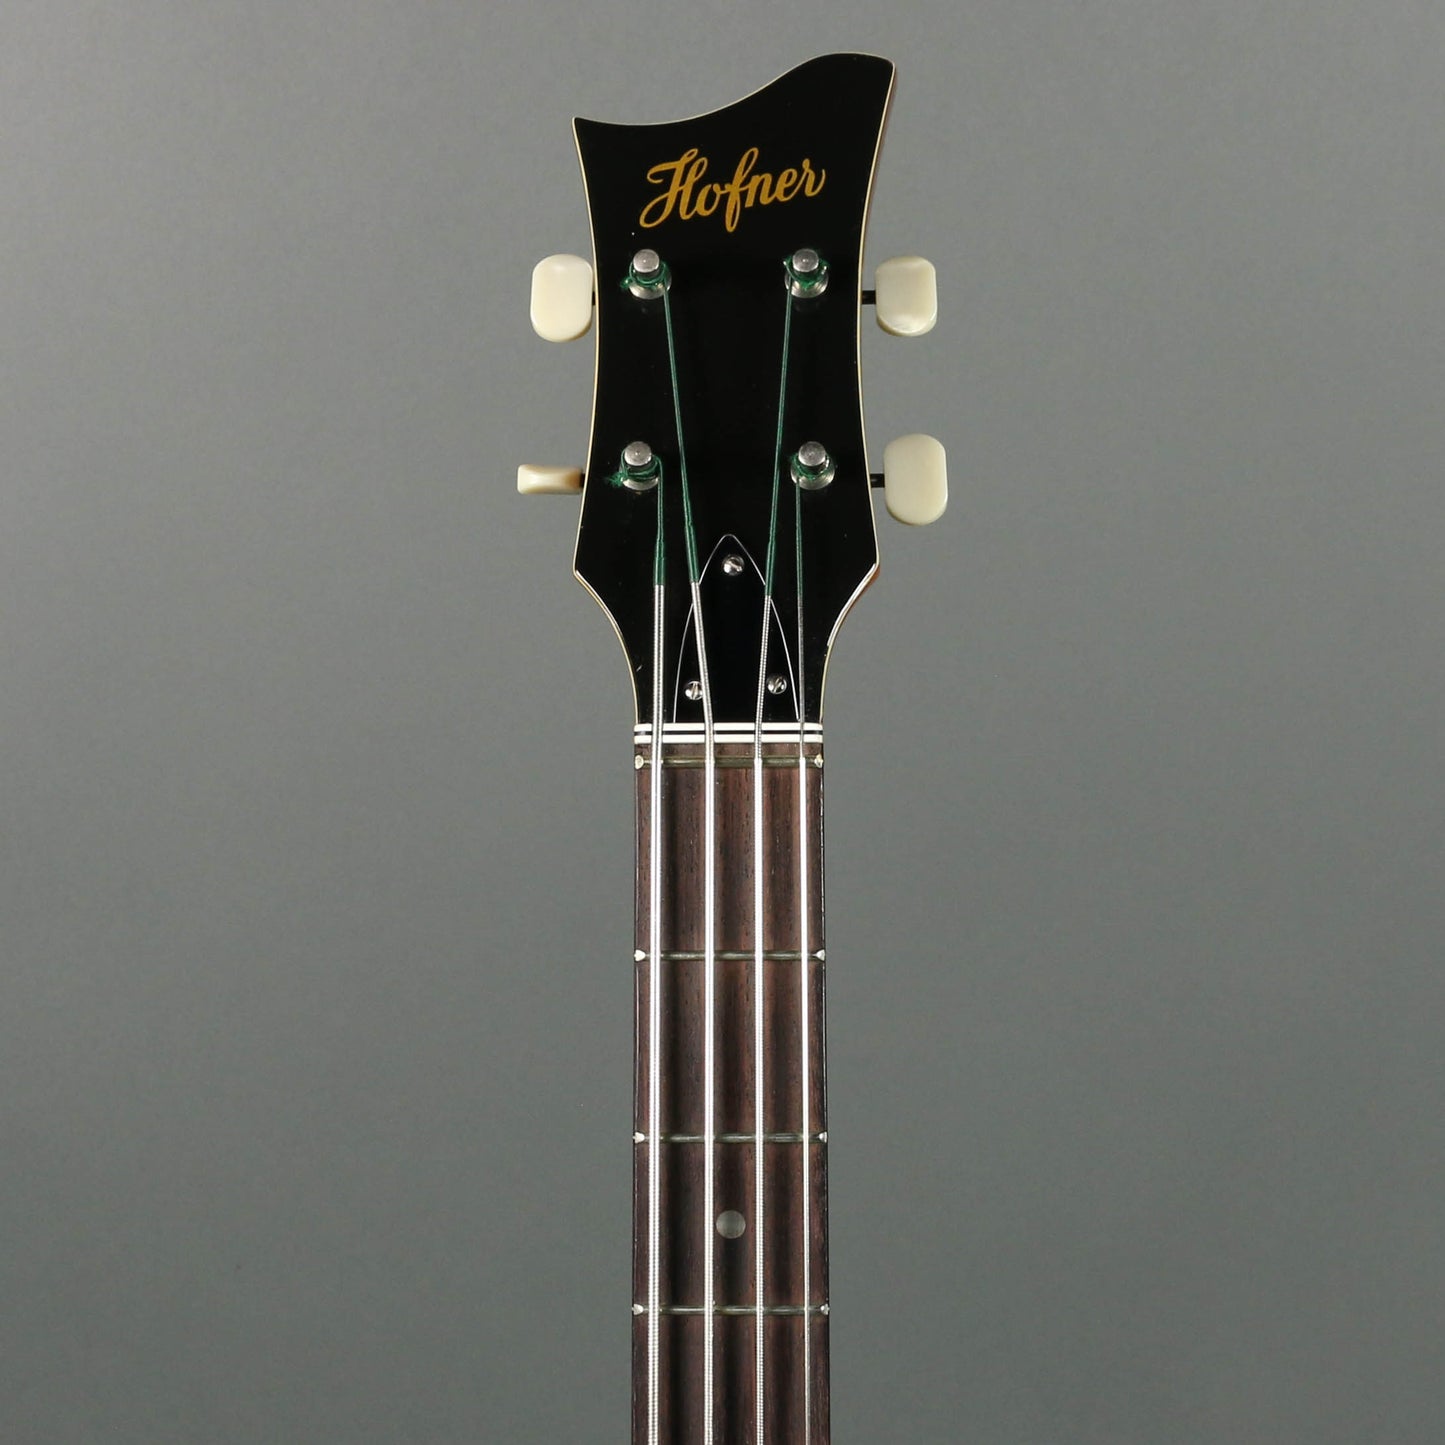 2007 Hofner 500/1 Vintage '62 Bass